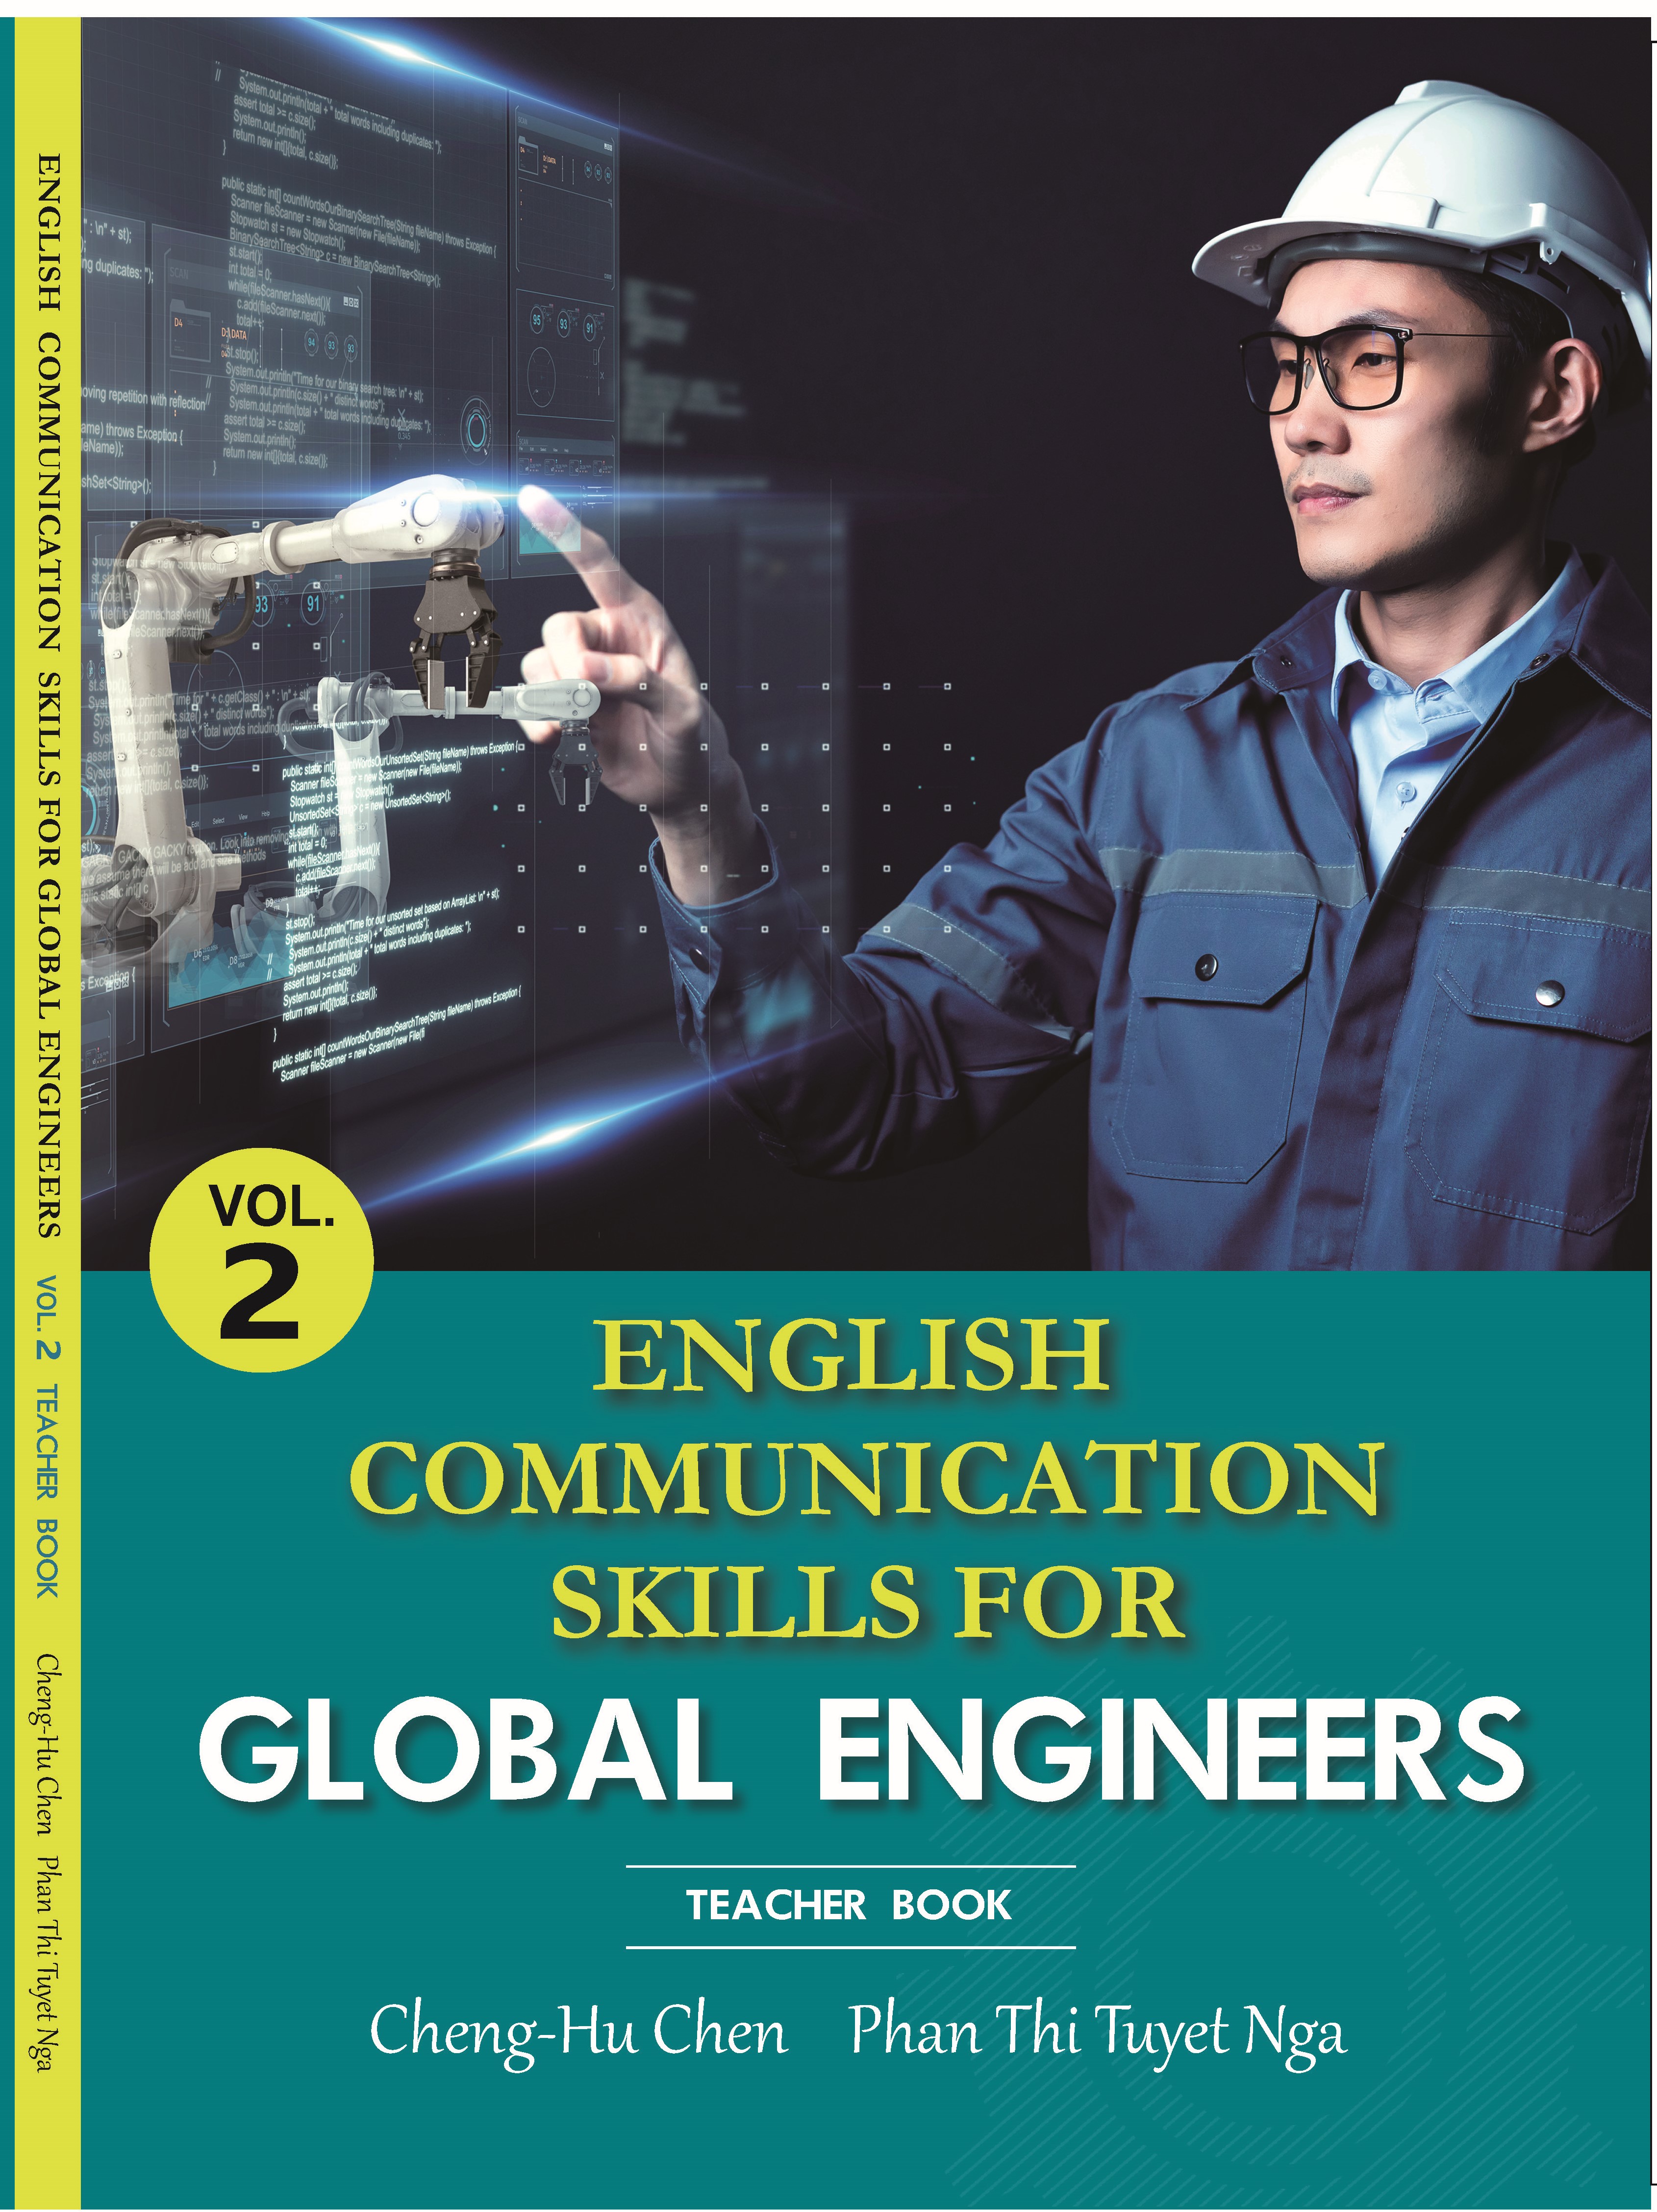 English communication skills for global engineers, Teacher book, Vol.2